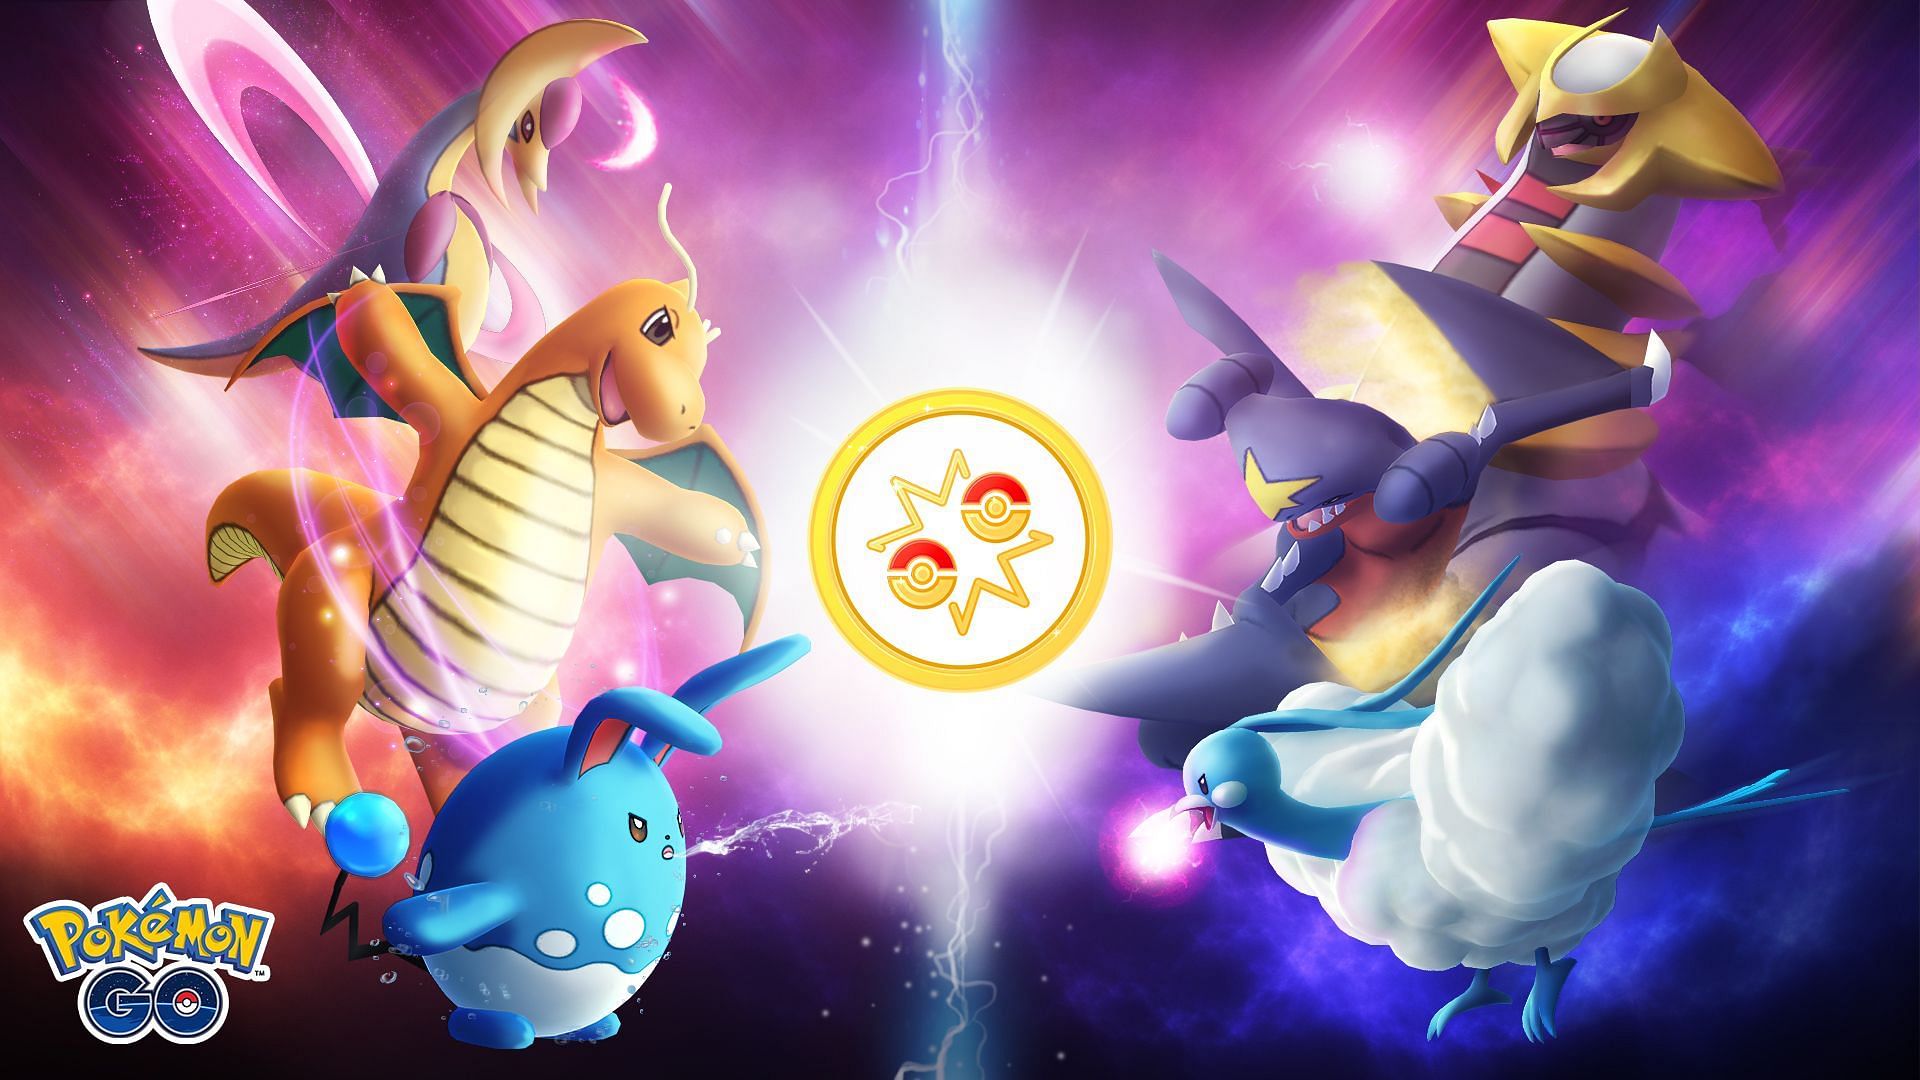 Best Ultra League picks in Pokemon GO (Image via Niantic/The Pokemon Company)